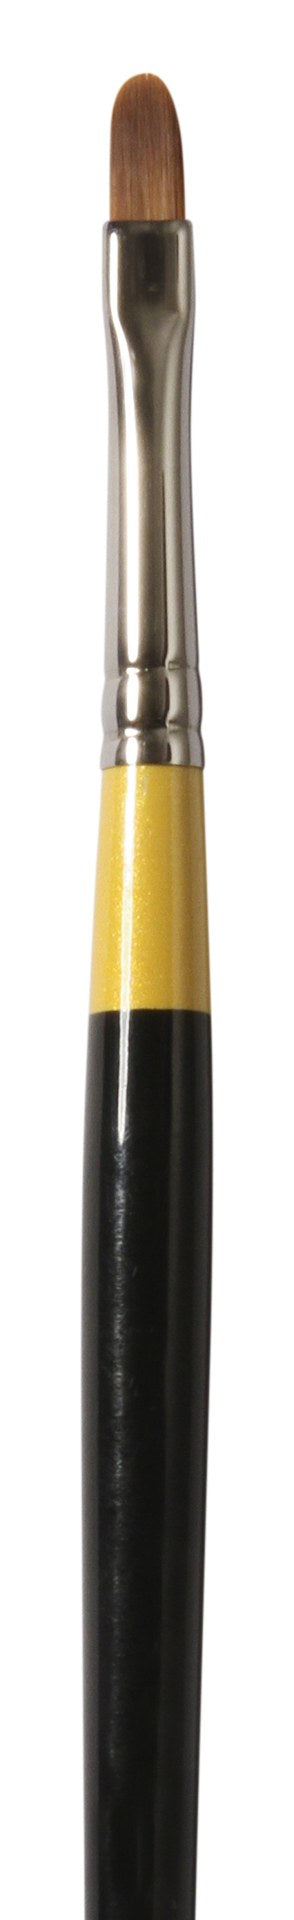 Daler Rowney System 3 S67 Filbert Synthetic Art Paint Brush#Size_0